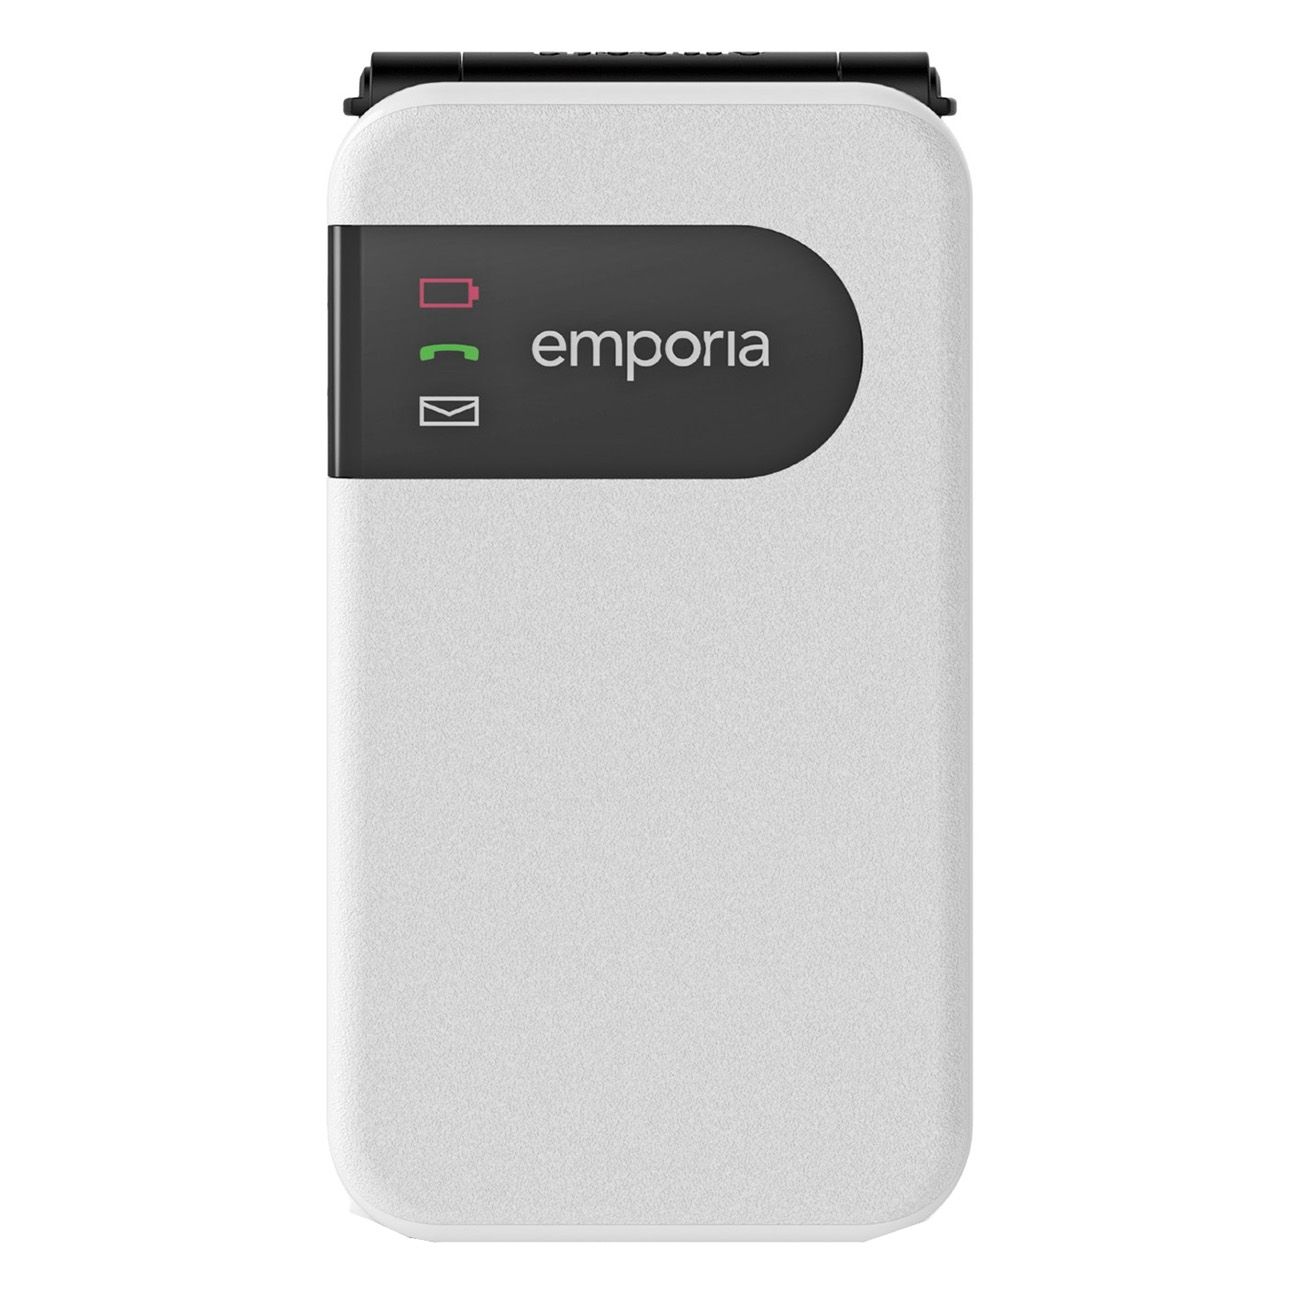 Emporia SIMPLICITY glam Senioren-Telefon